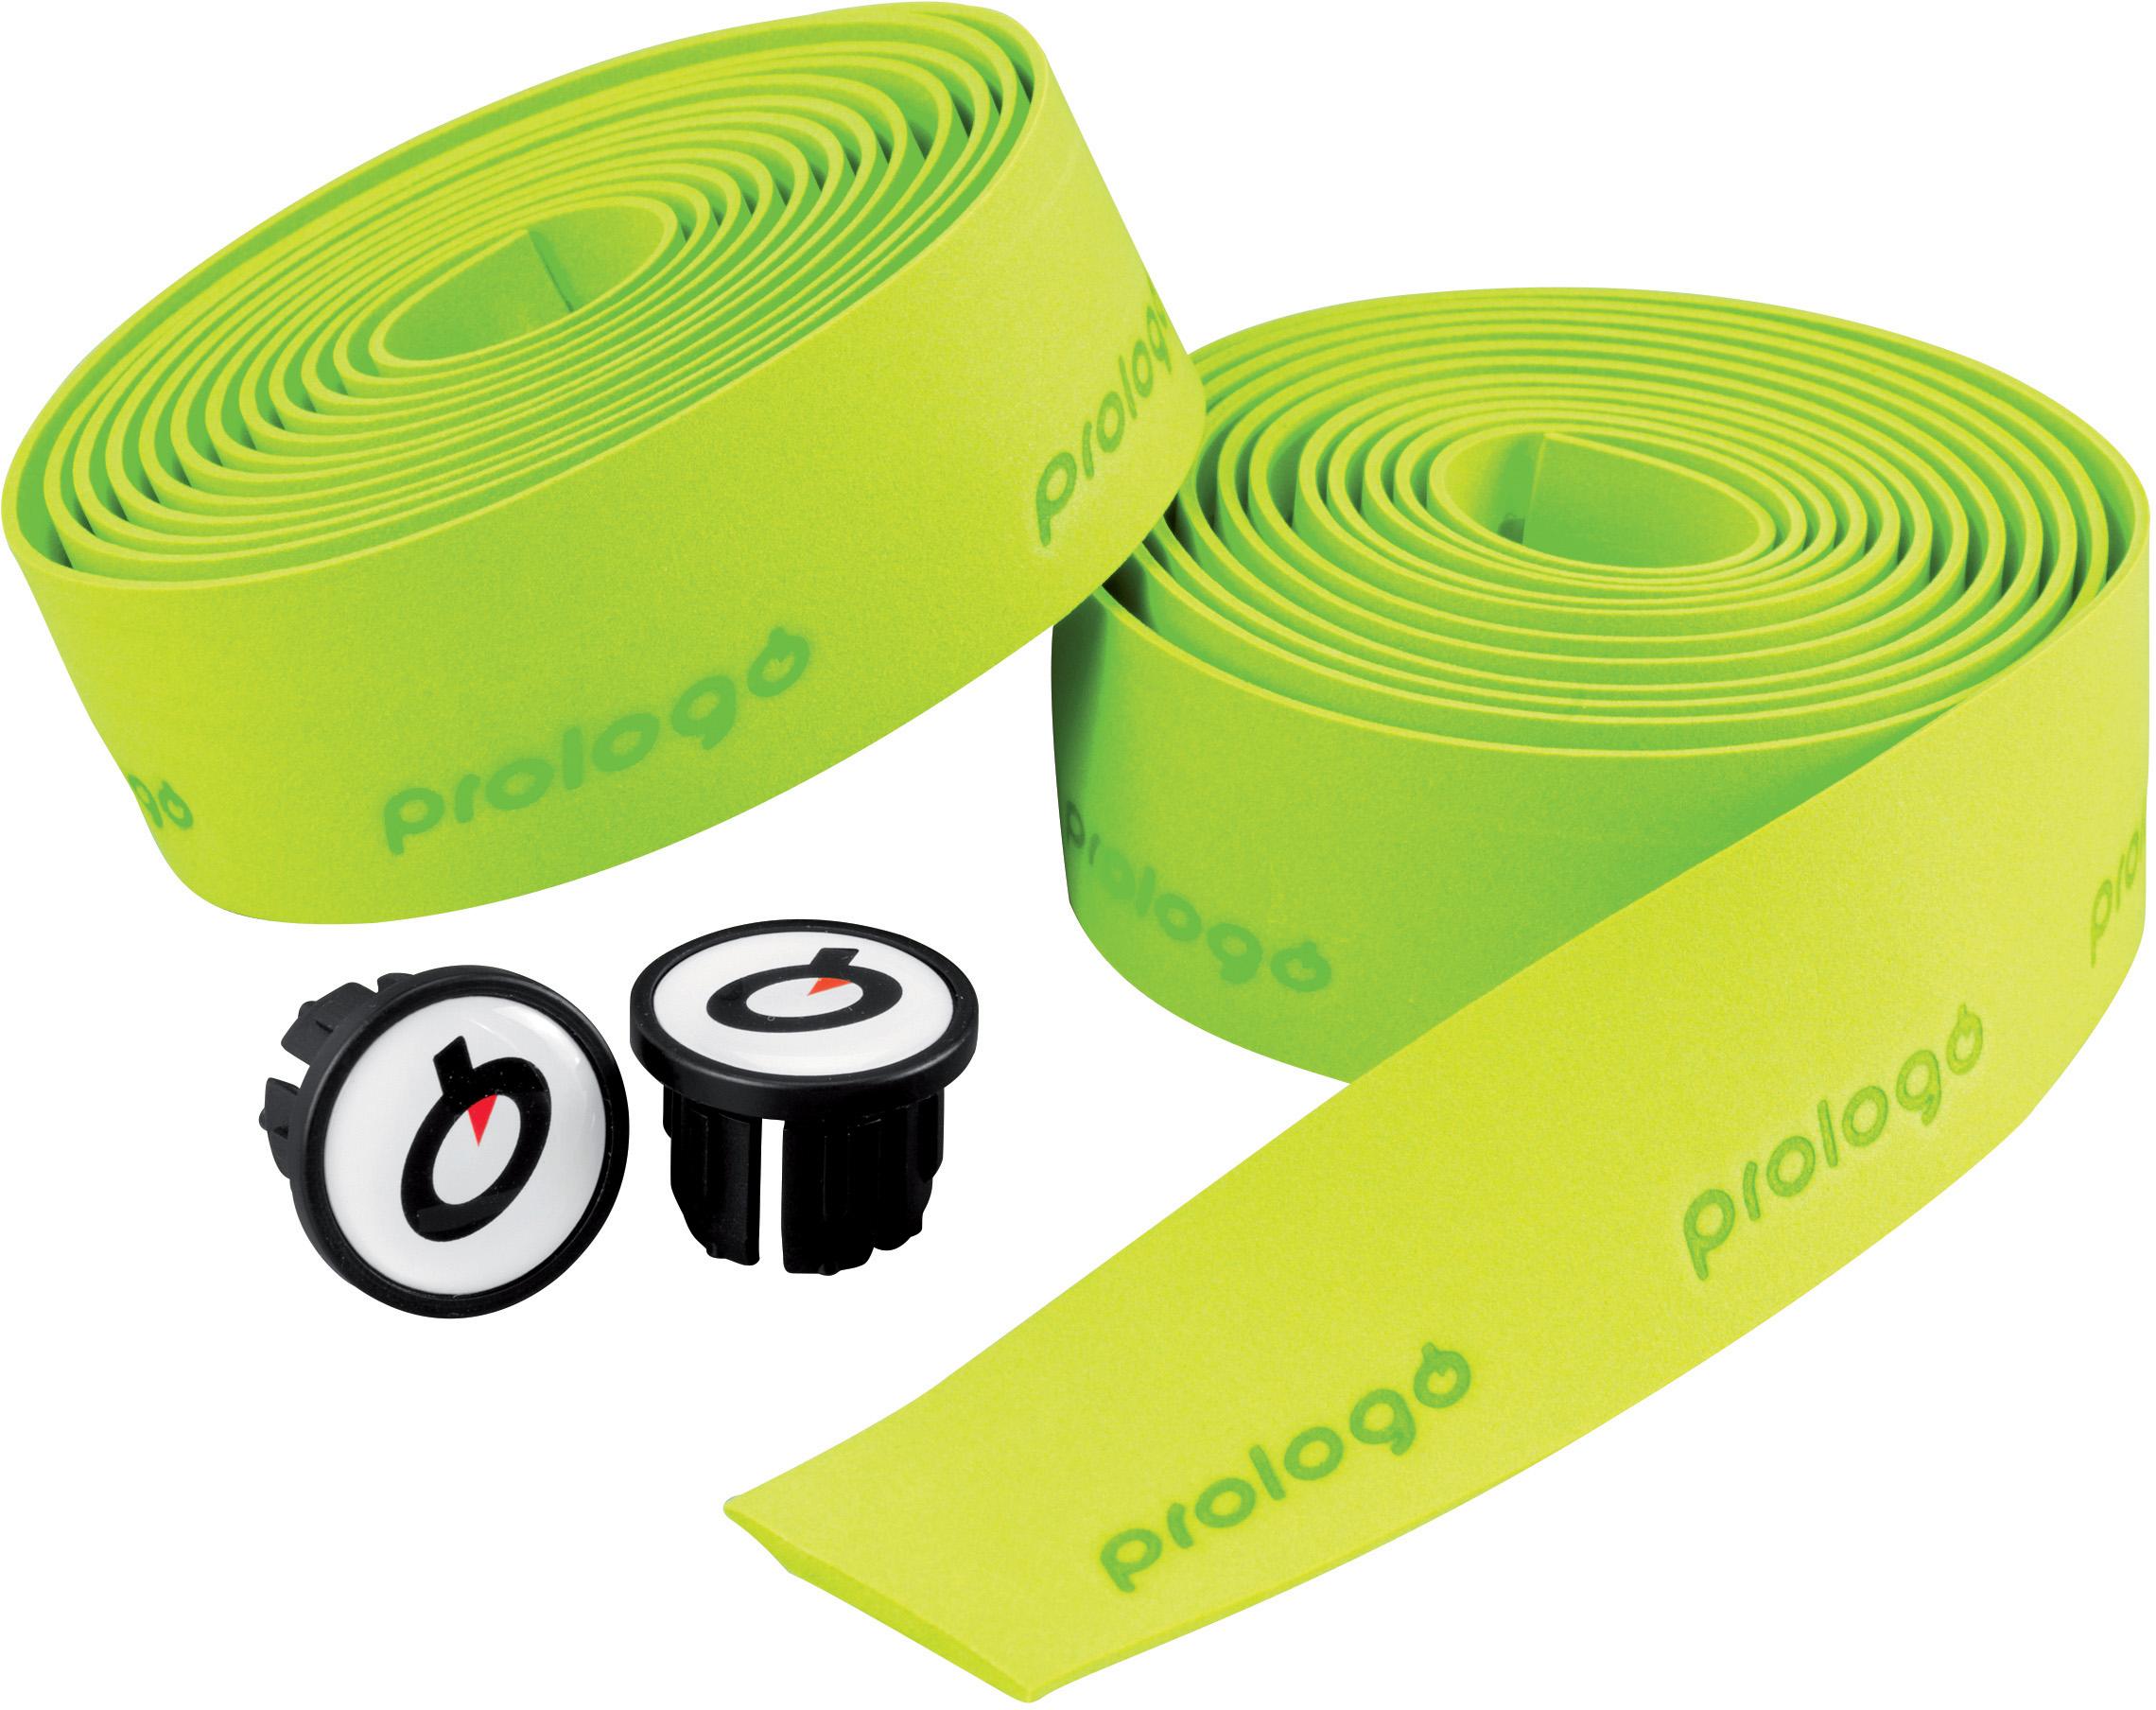 Prologo Plaintouch Bar Tape  Green Fluoro